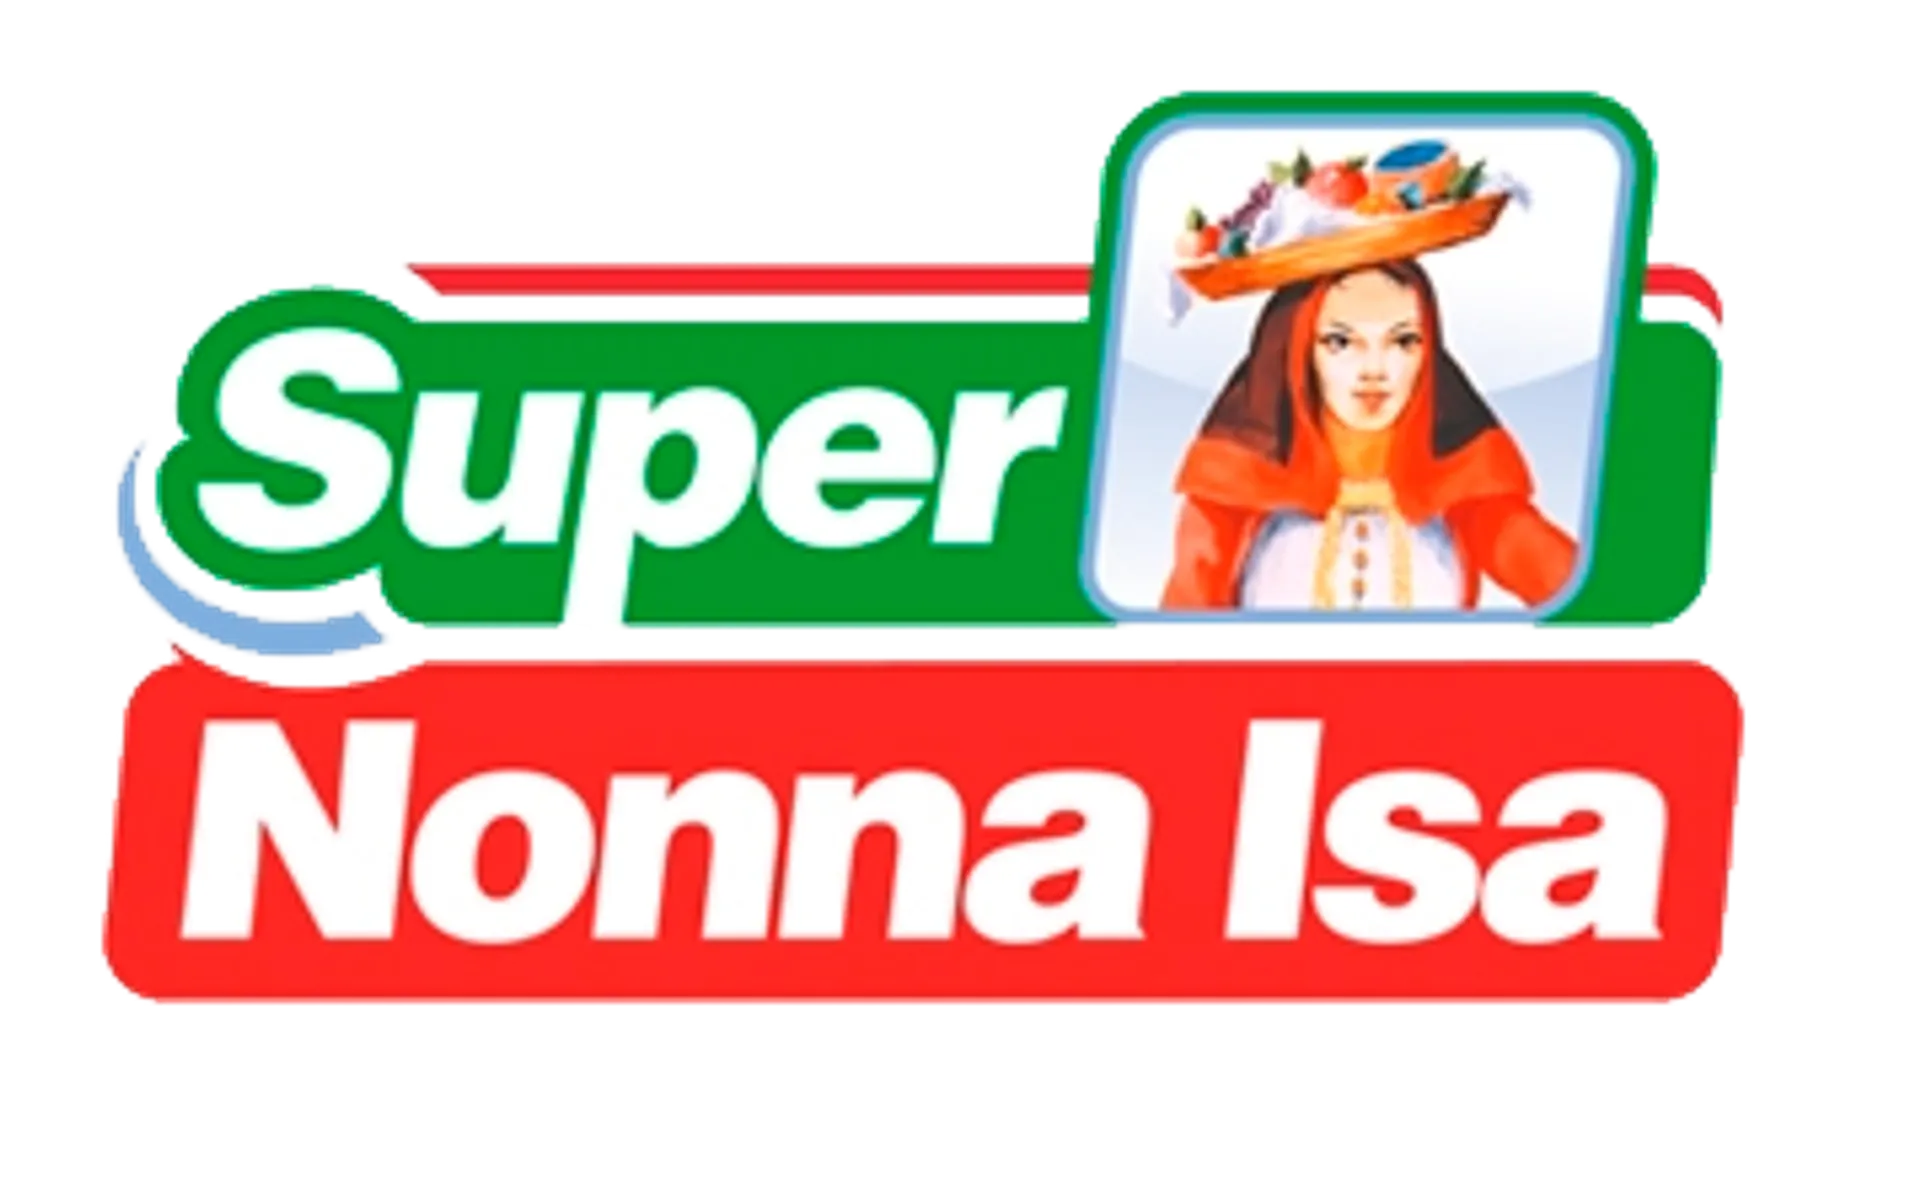 SUPERMERCATI NONNA ISA logo